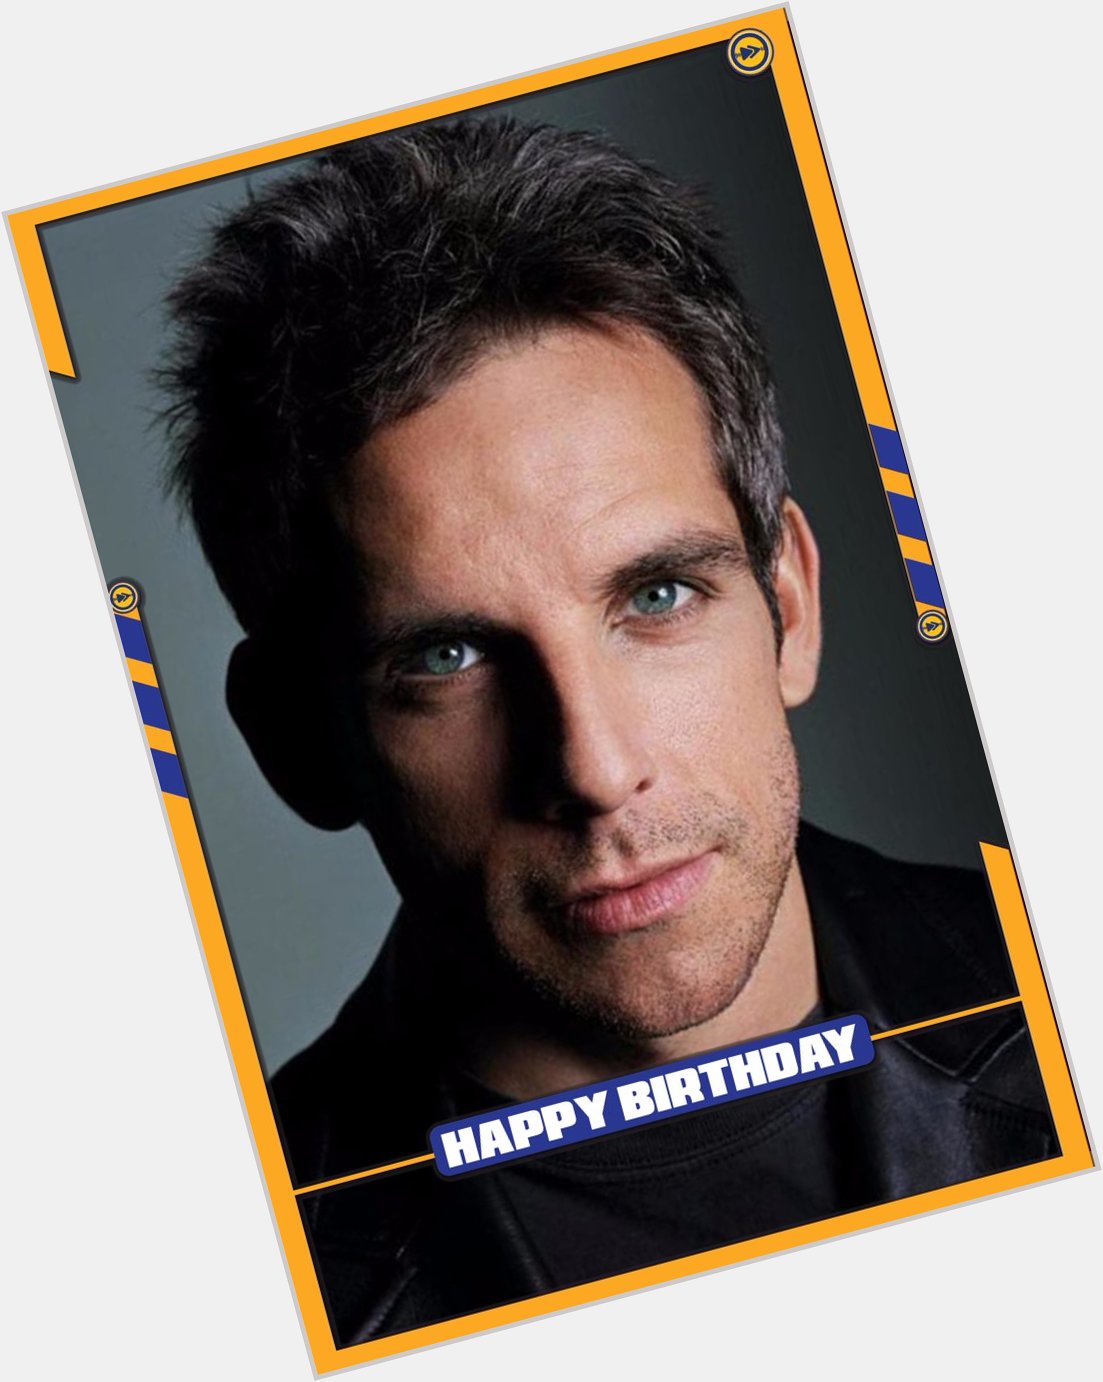 Happy birthday to the Hollywood actor, Ben Stiller!!!  